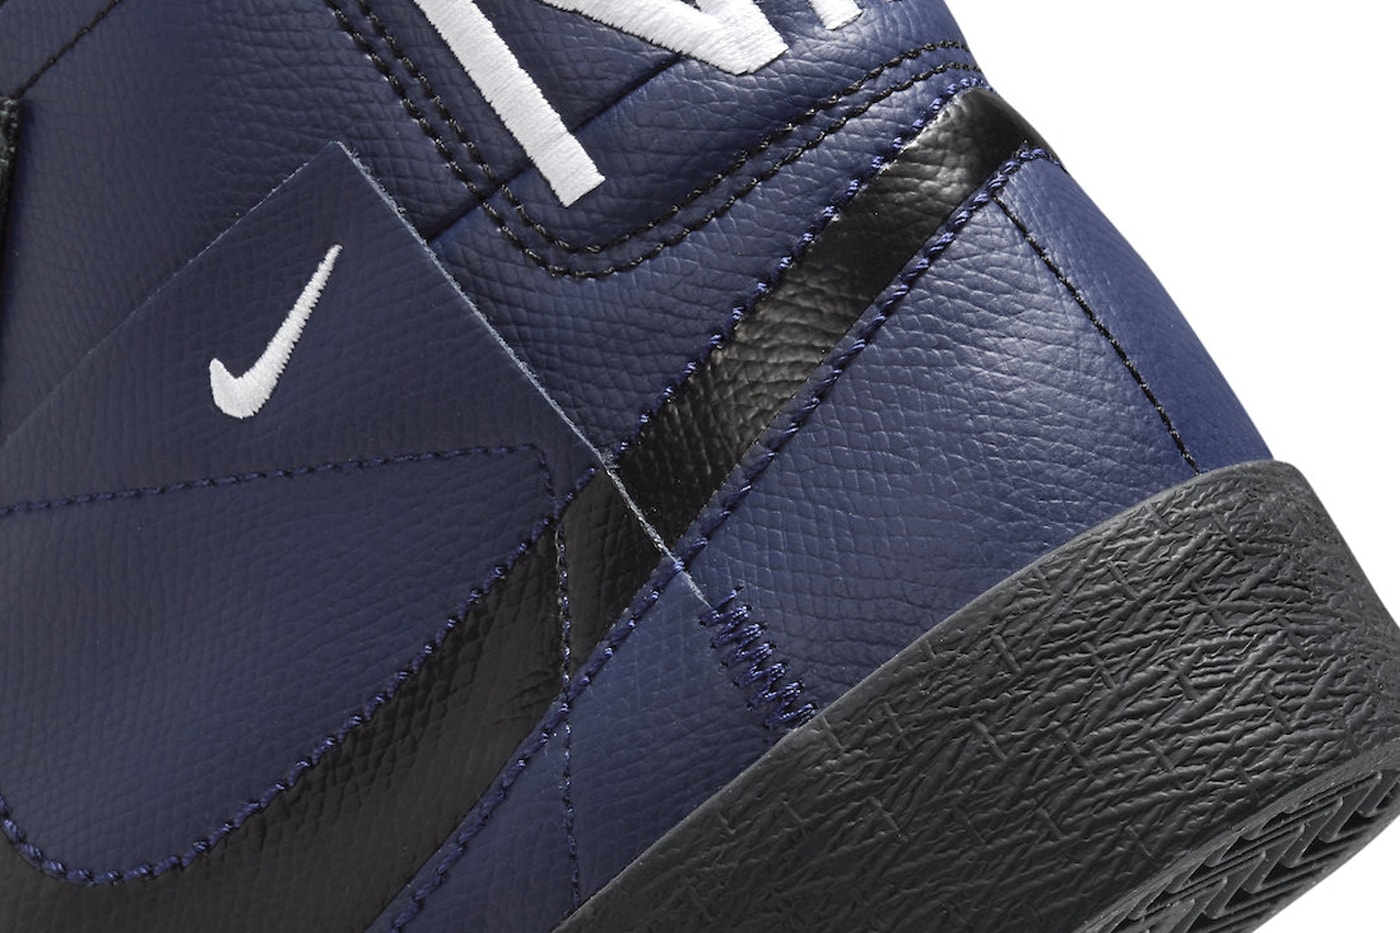 Nike SB Blazer Mid Premium “Navy/Black” Release | Hypebeast